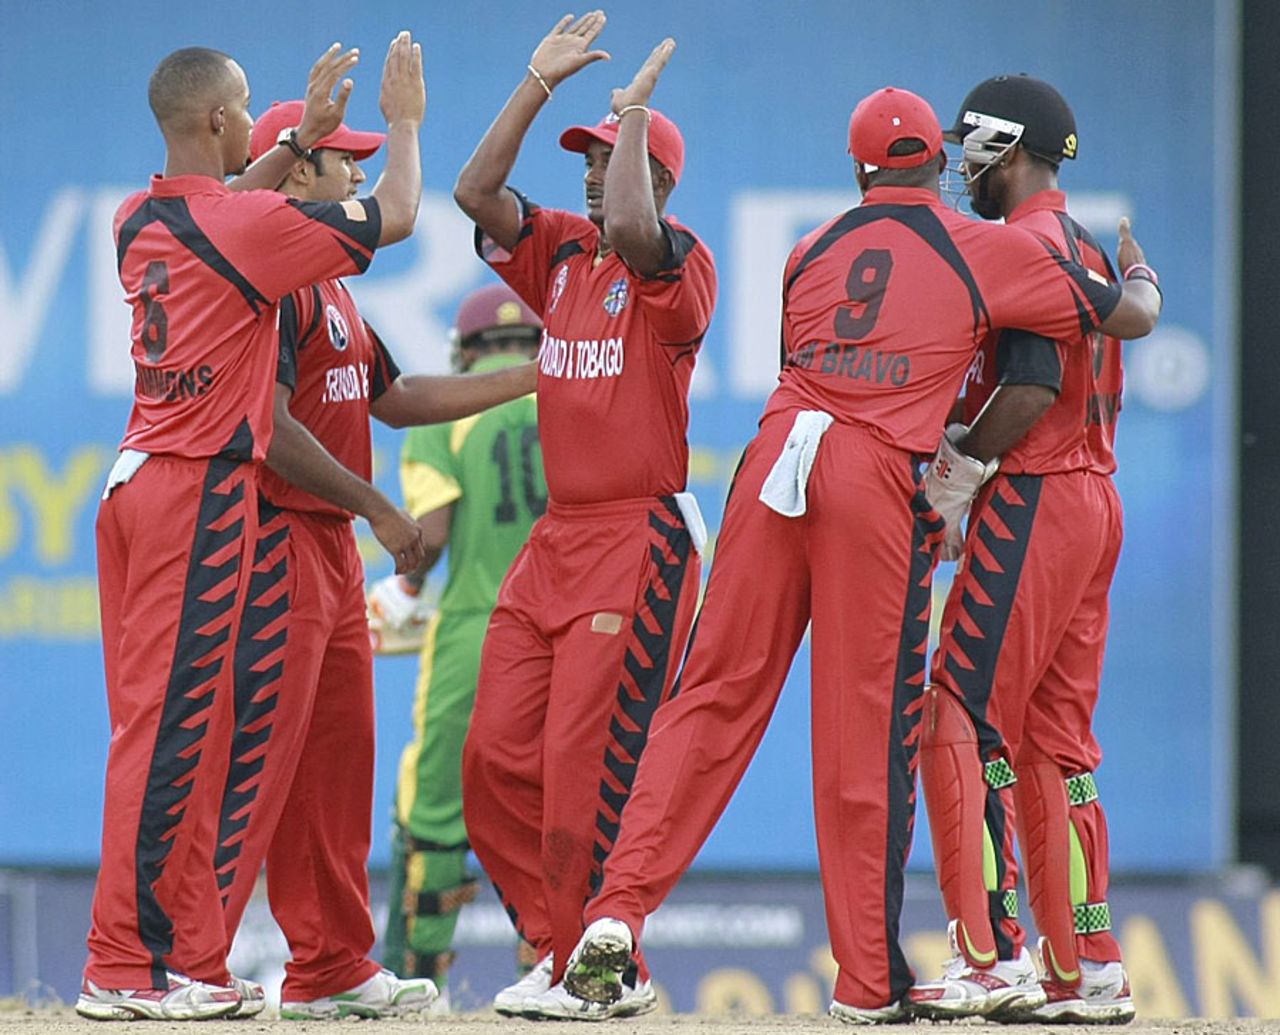 Trinidad and Tobago celebrate a strike, Trinidad & Tobago, Caribbean T20, 1st semi-final, Port of Spain, July 30, 2010